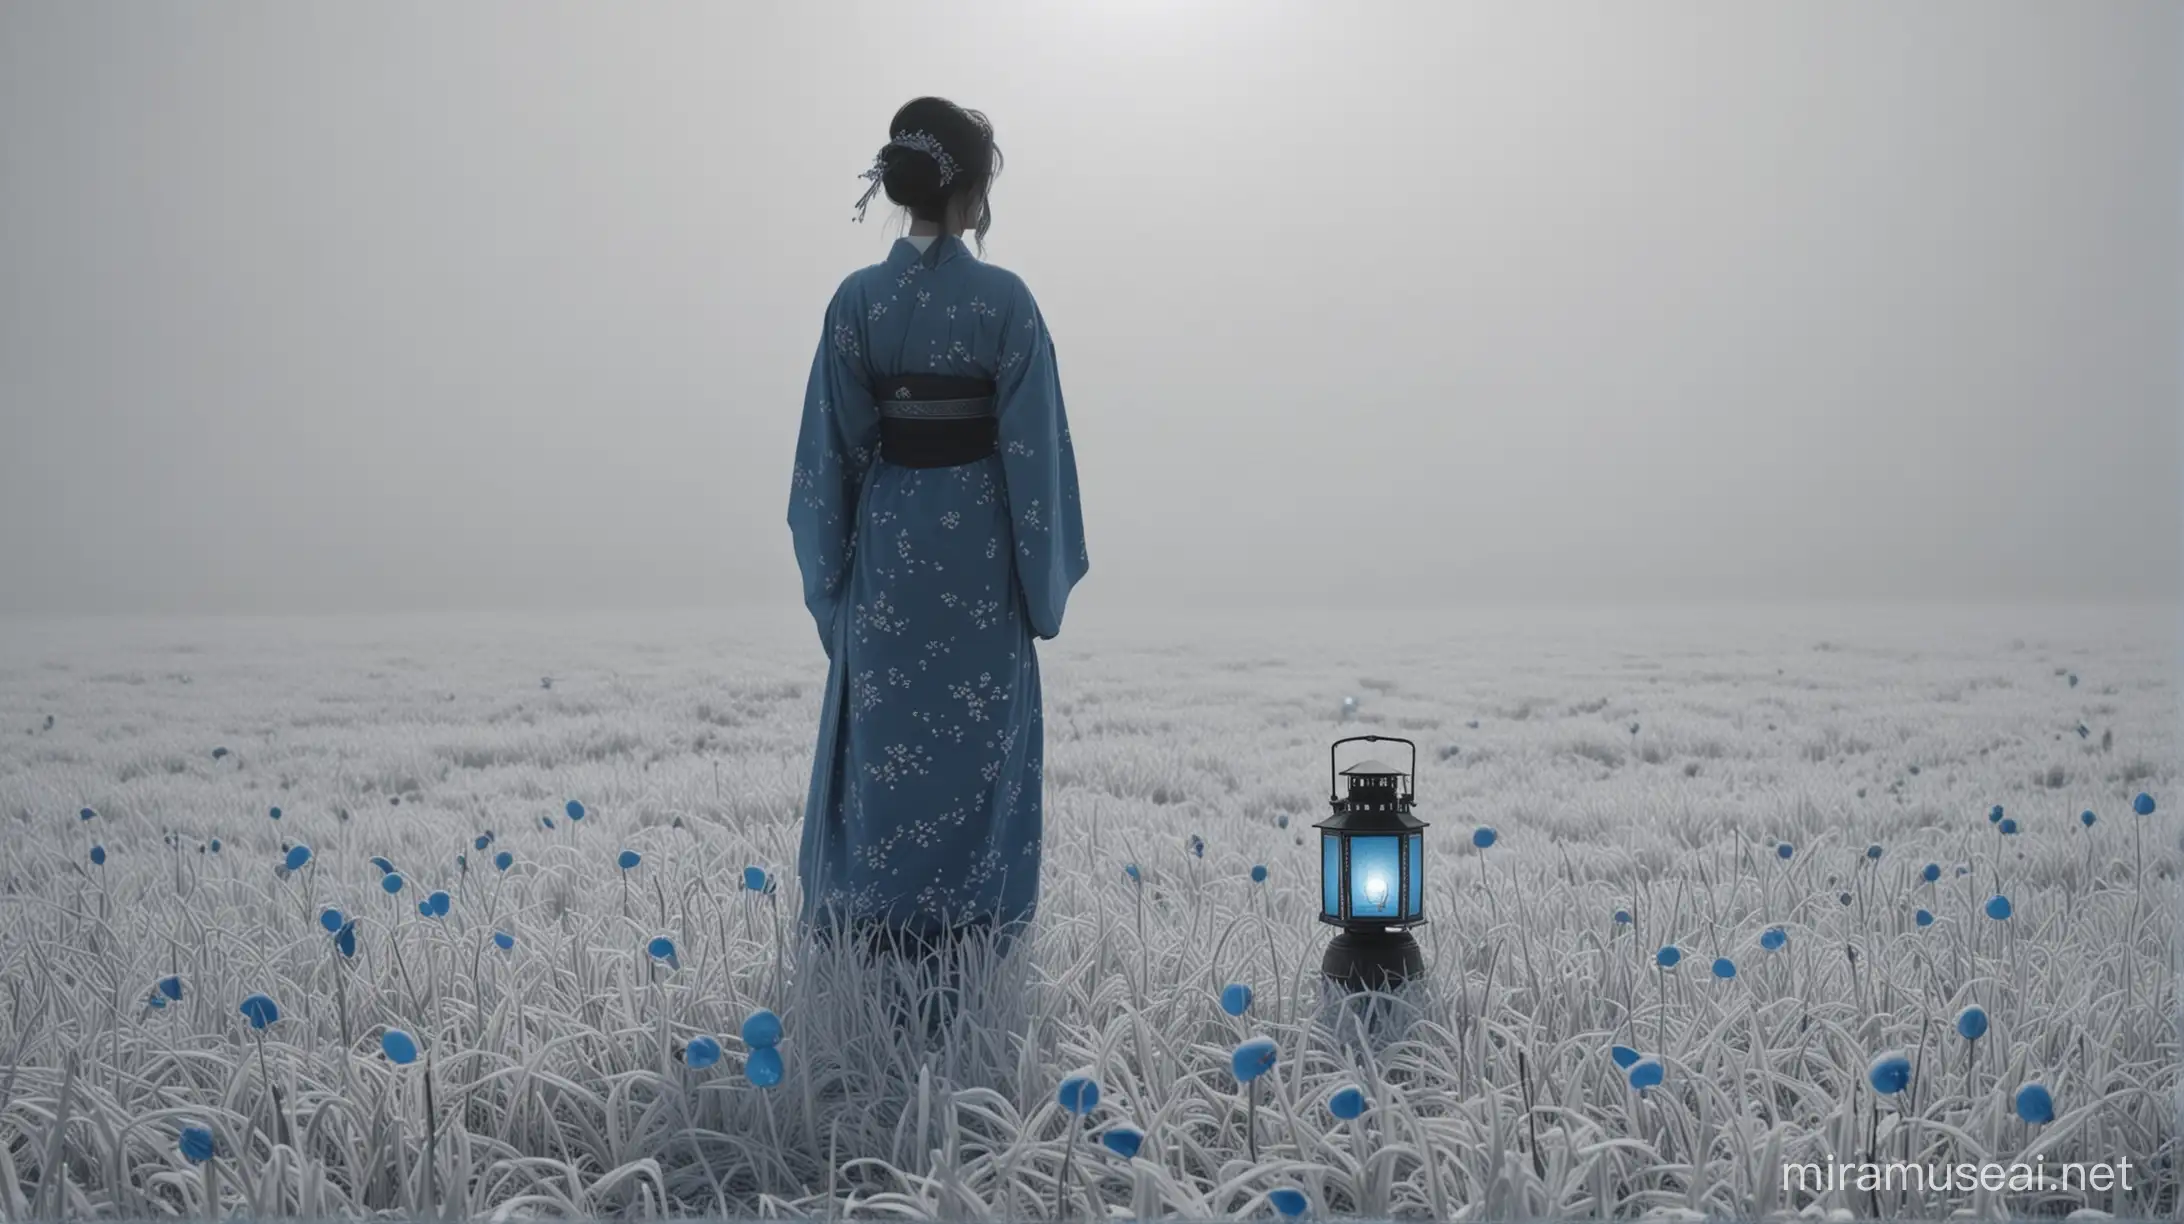 Elegant Japanese Lady with Blue Lantern in Frosty Field